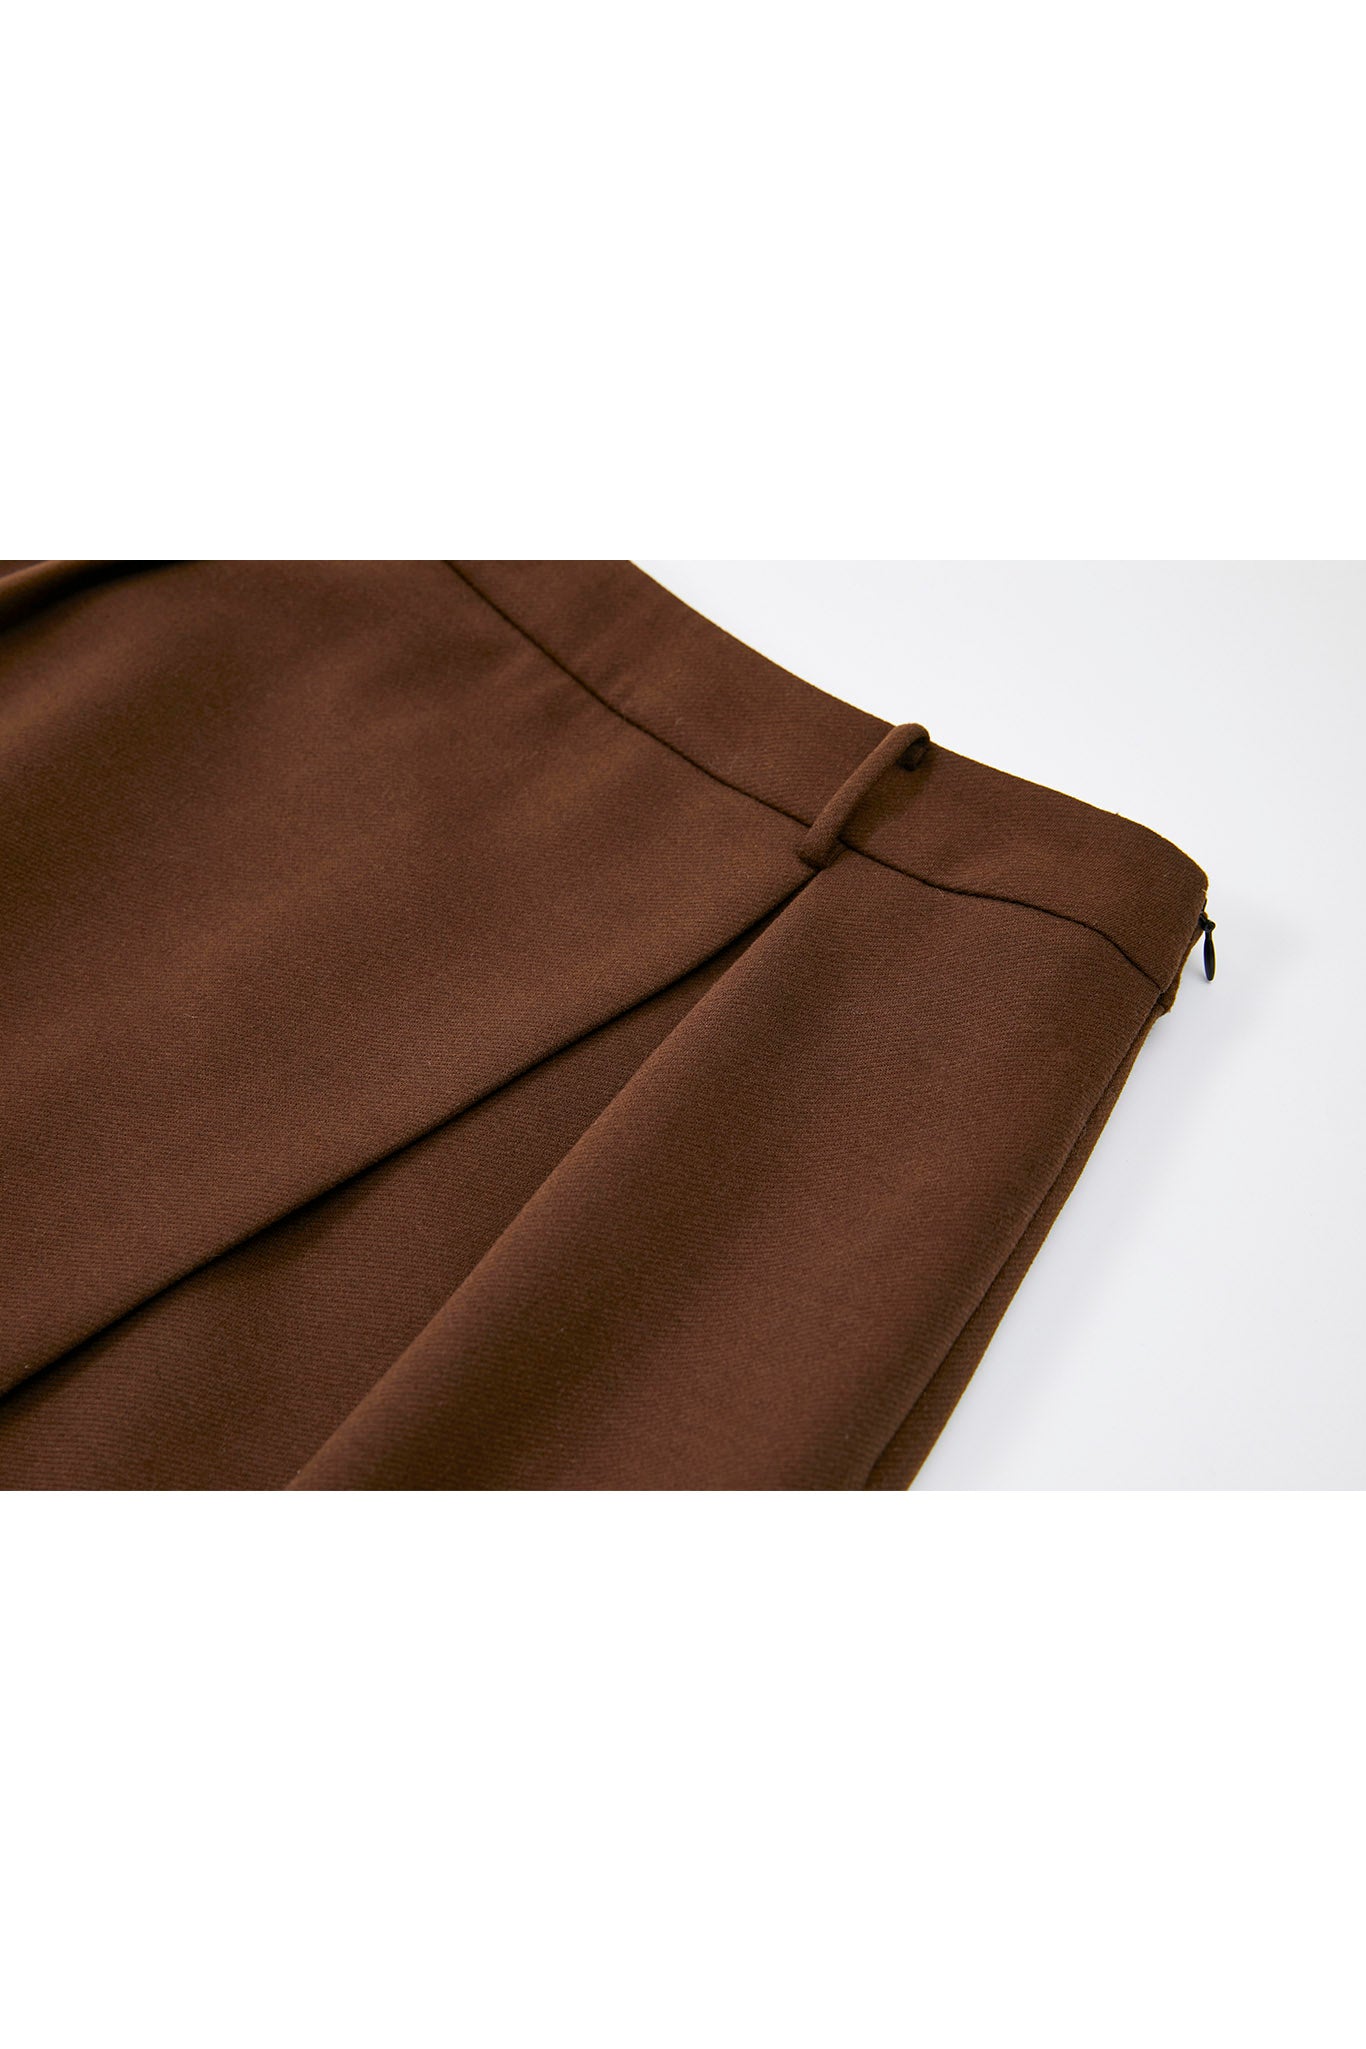 [tageechita] Wrap style back slit skirt